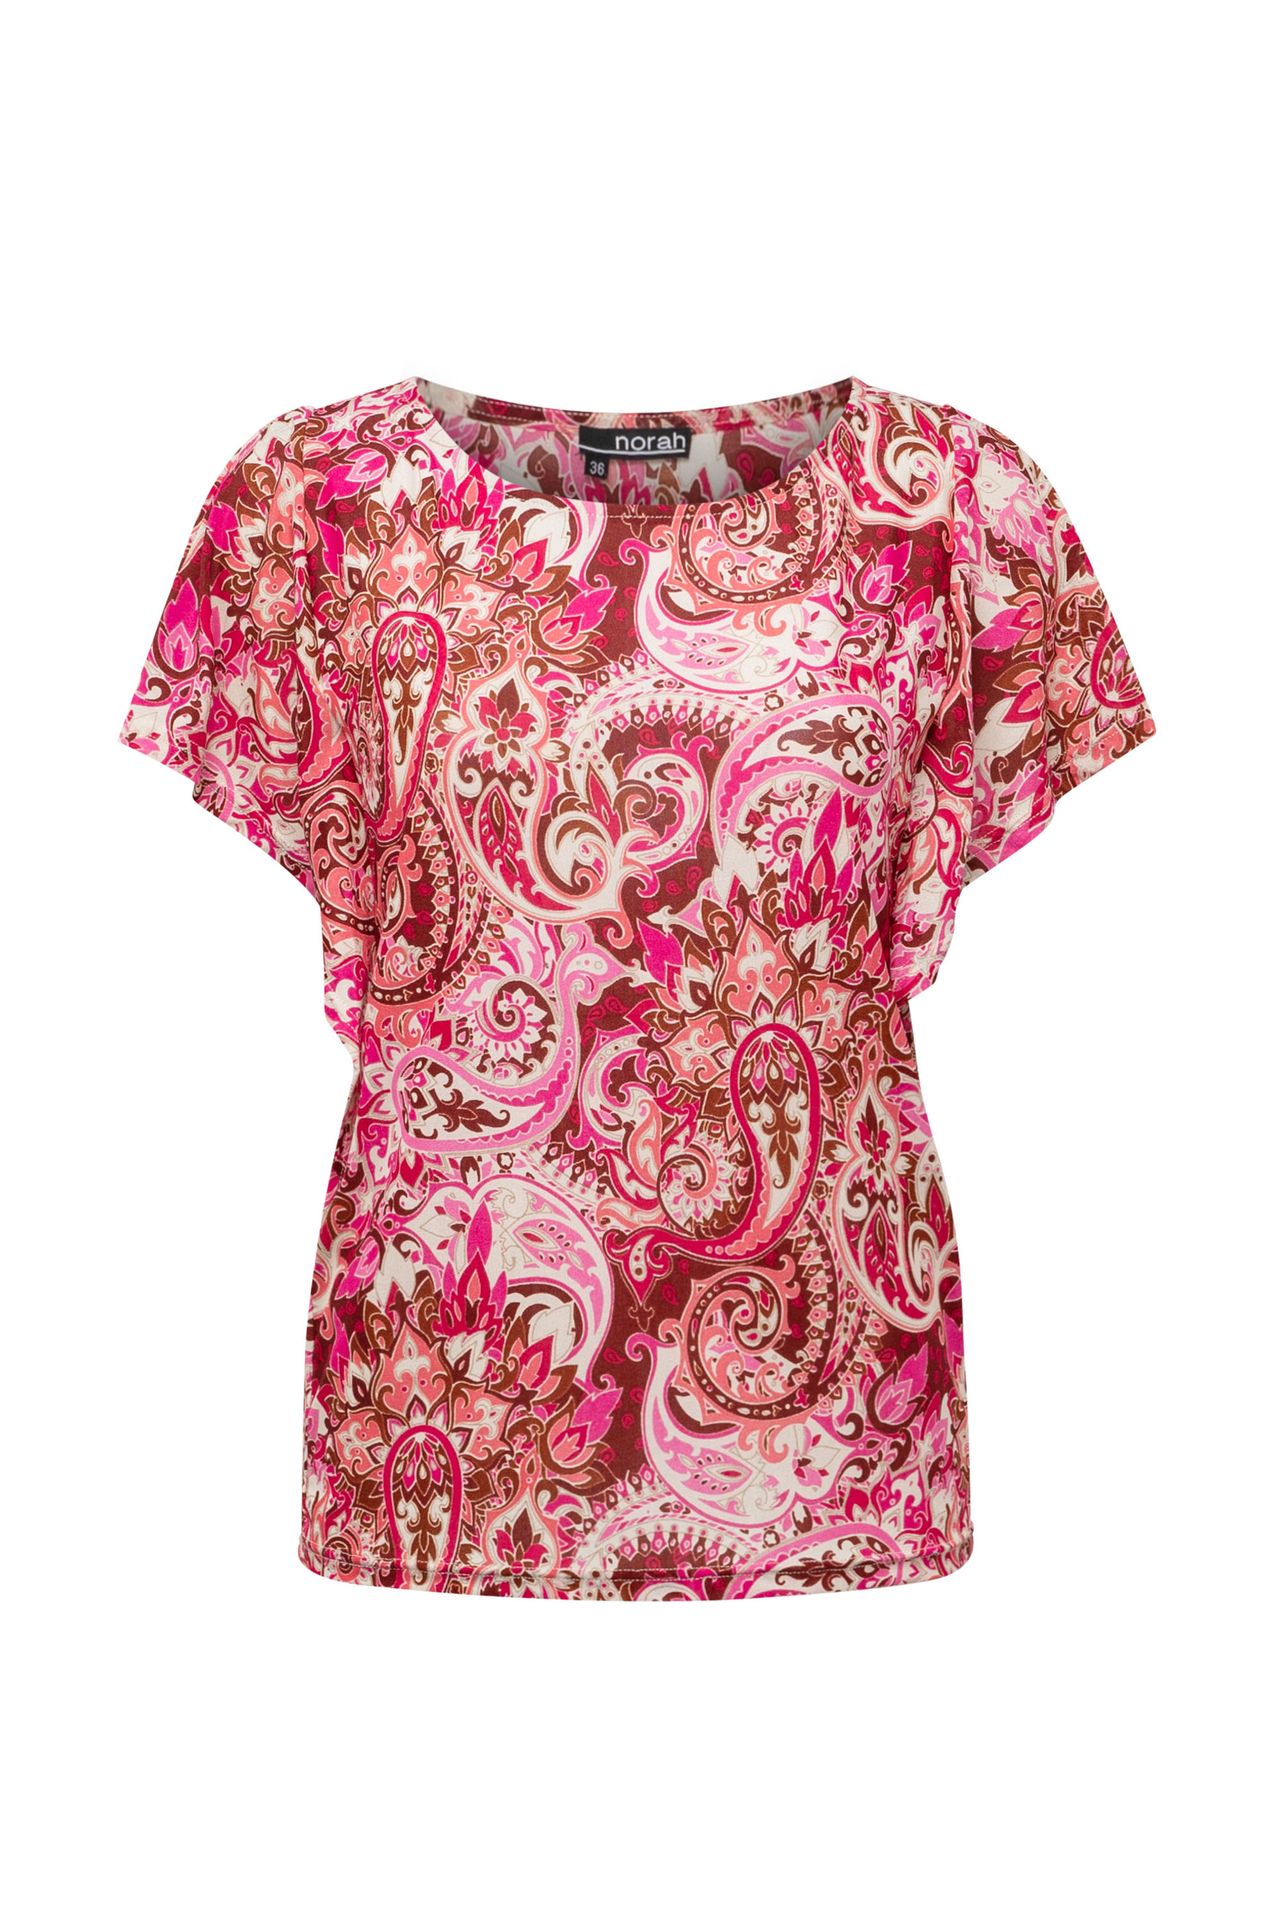 Norah Shirt grafische print pink multicolor 213683-920